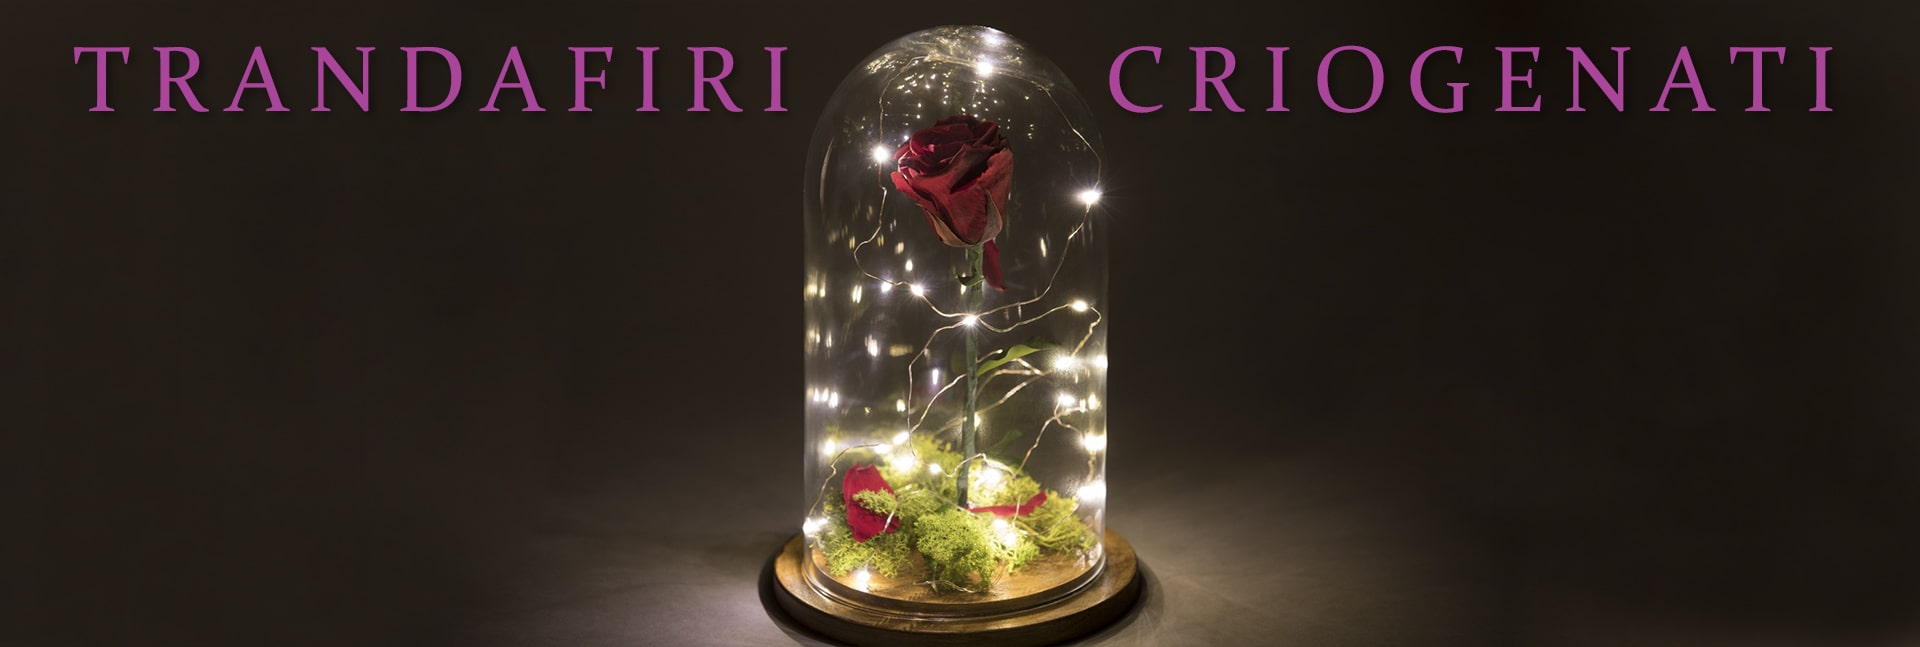 trandafiri-criogenati-1920x647